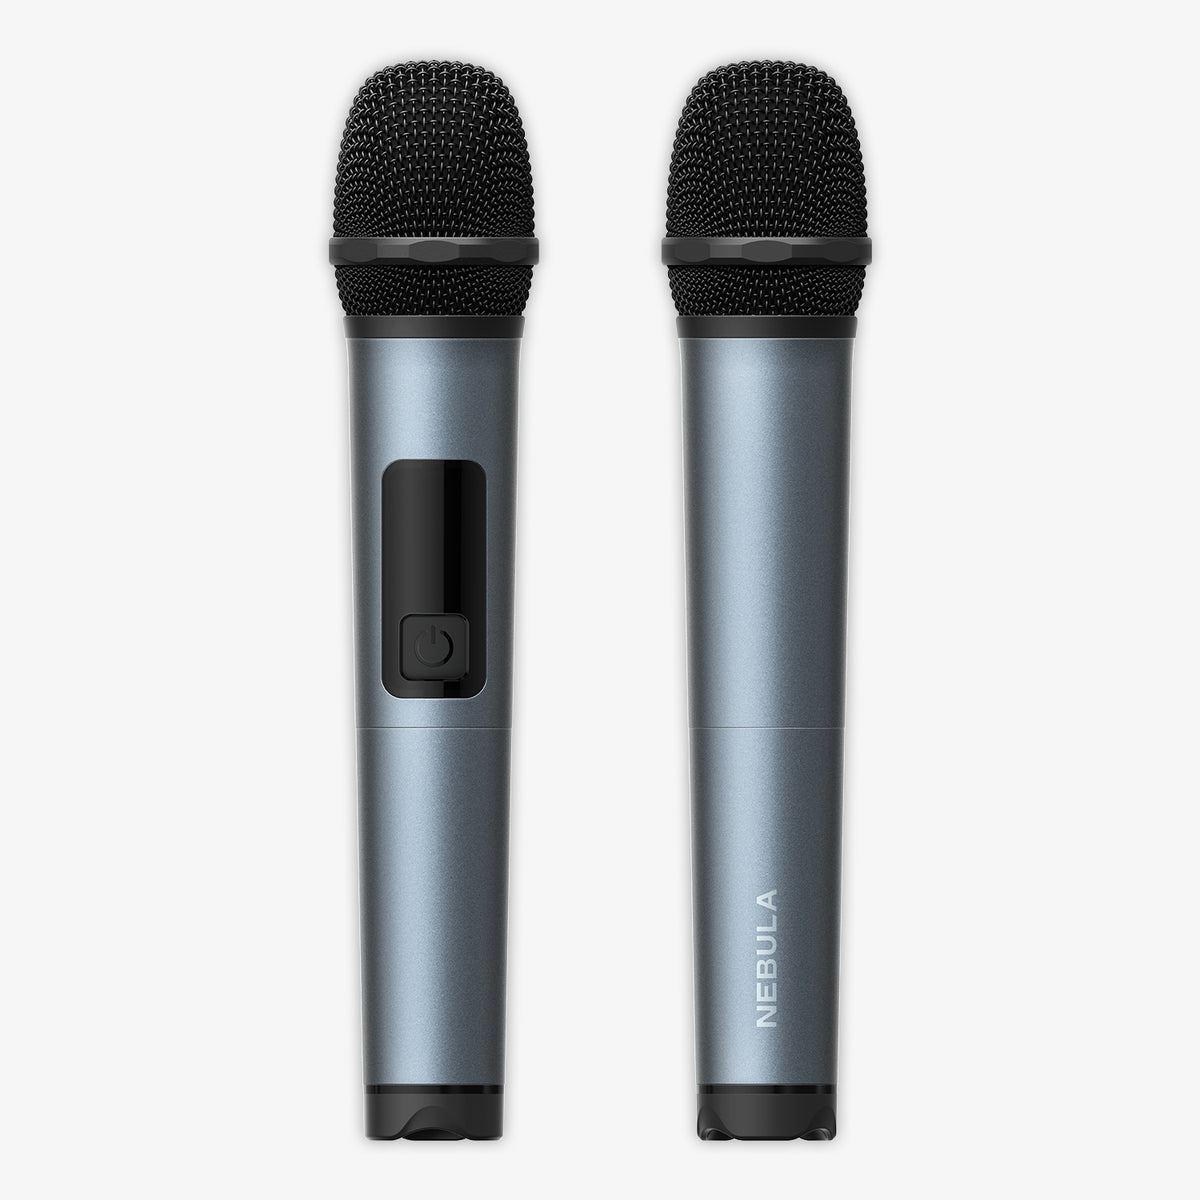 2× Microphone